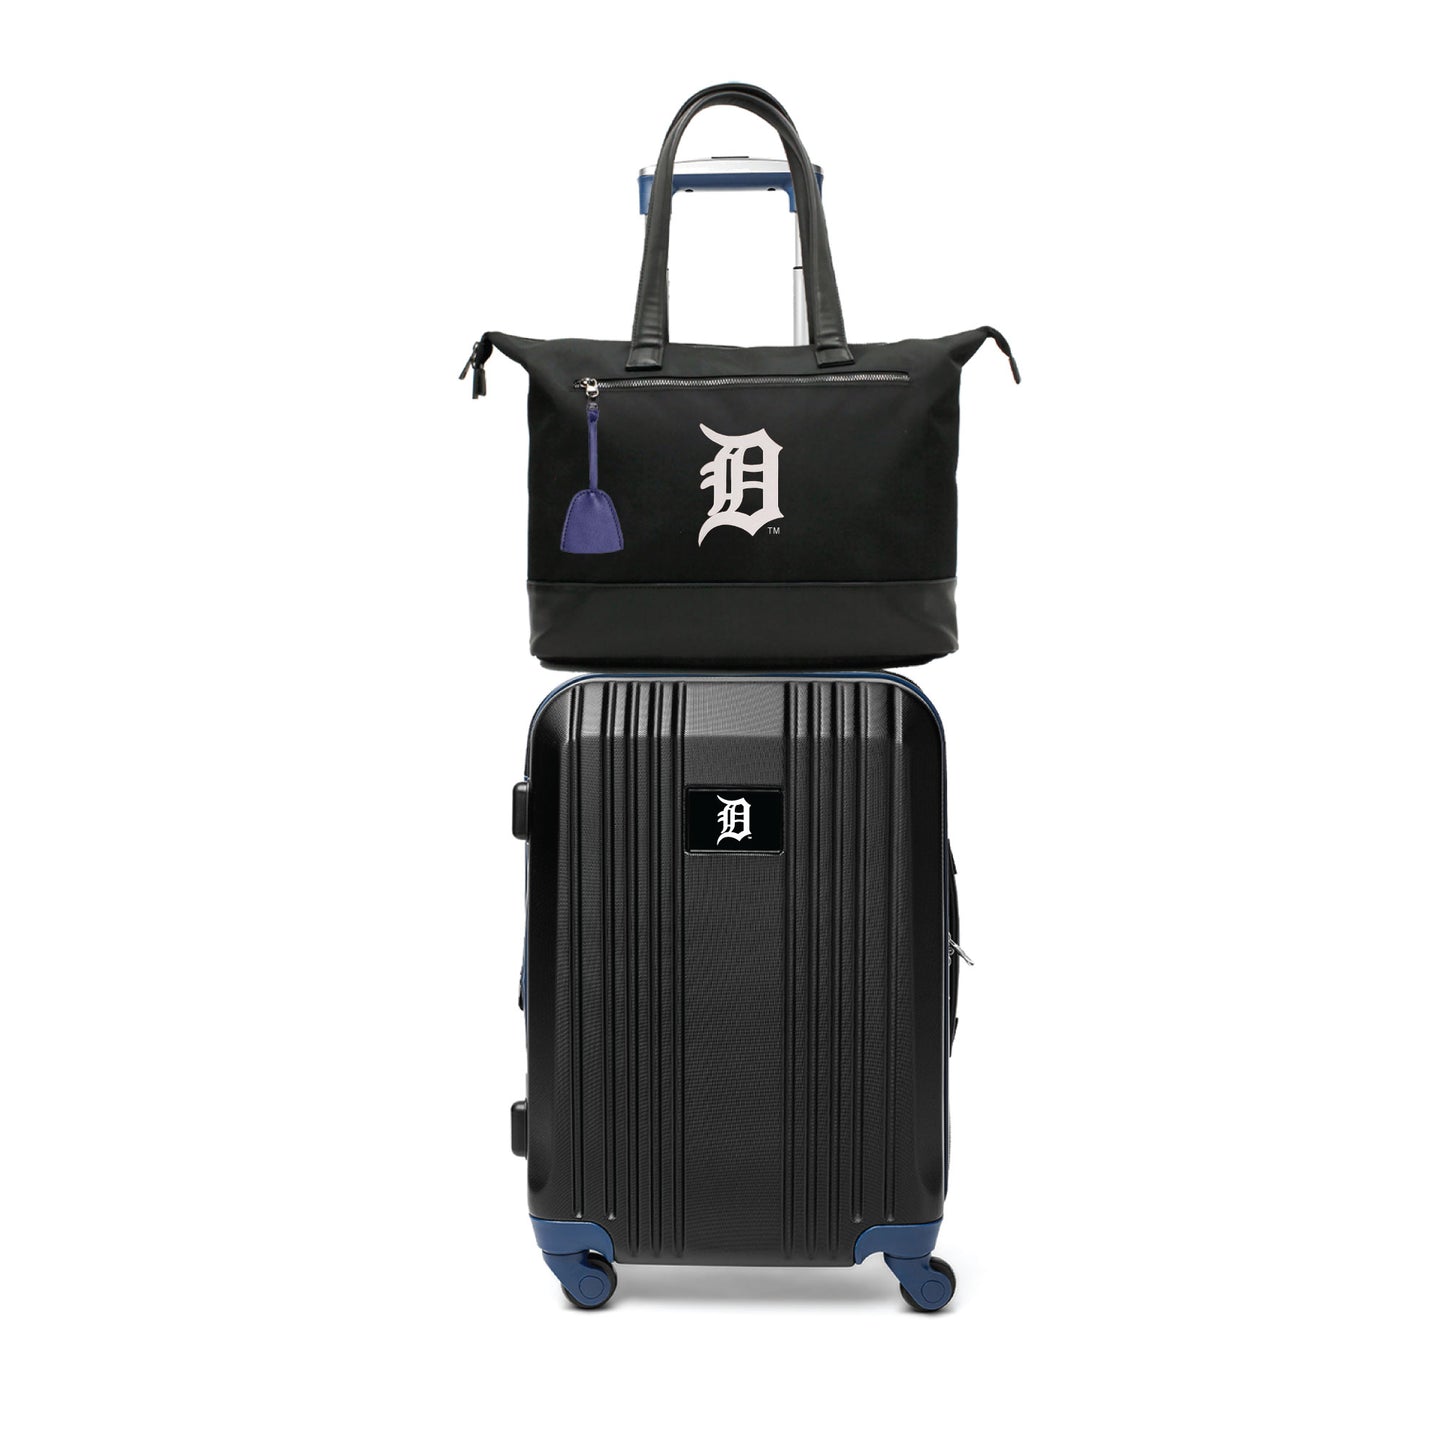 Detroit Tigers Premium Laptop Tote Bag and Luggage Set